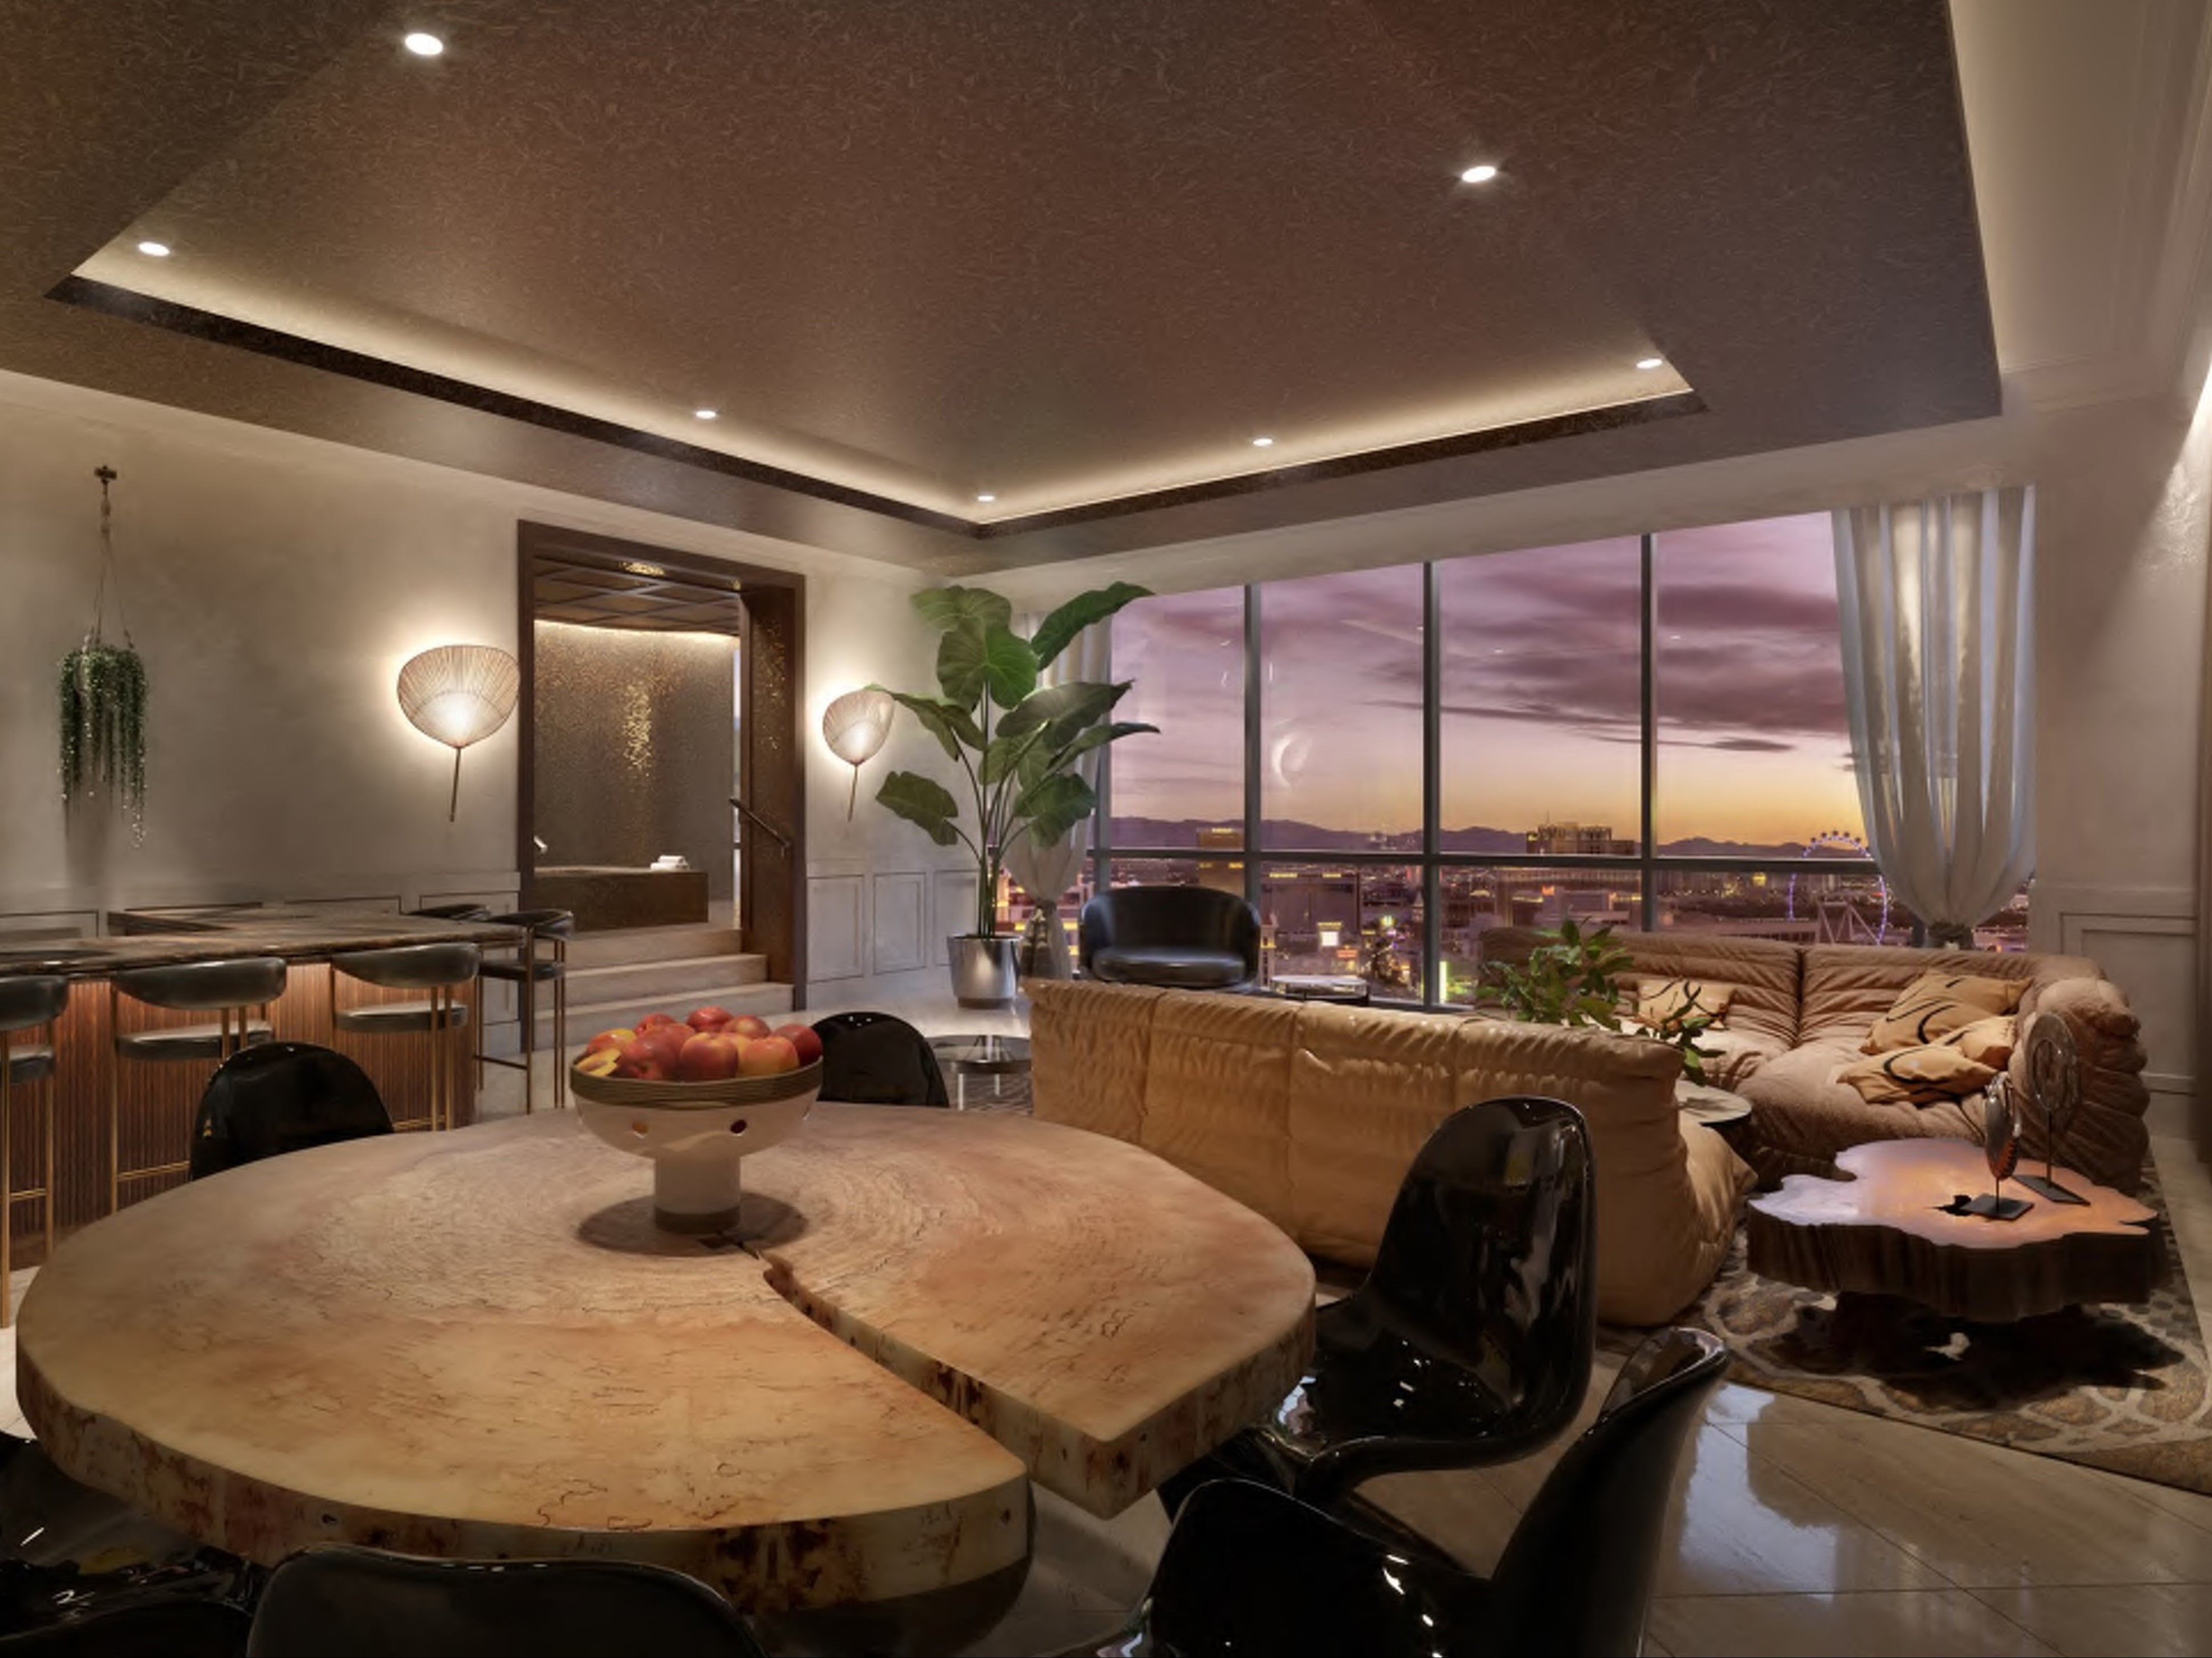 Owner’s suite: “Richard’s Flat” at Virgin’s new Las Vegas hotel